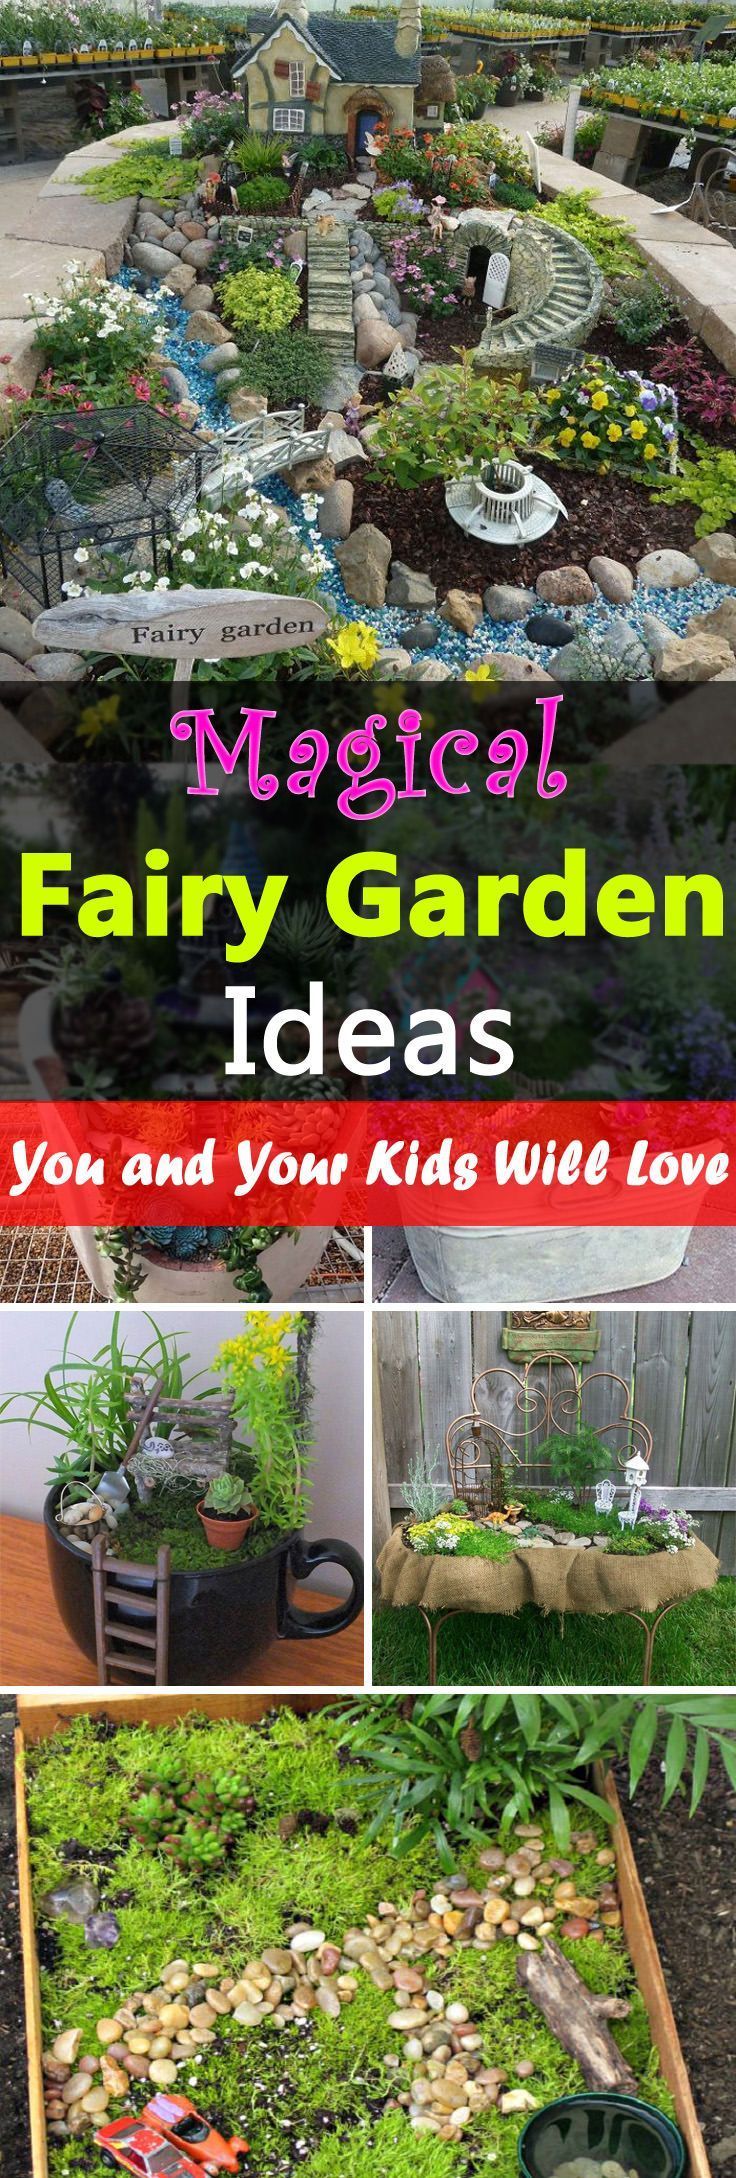 Magical Fairy Garden Ideas You & Your Kids Will Love